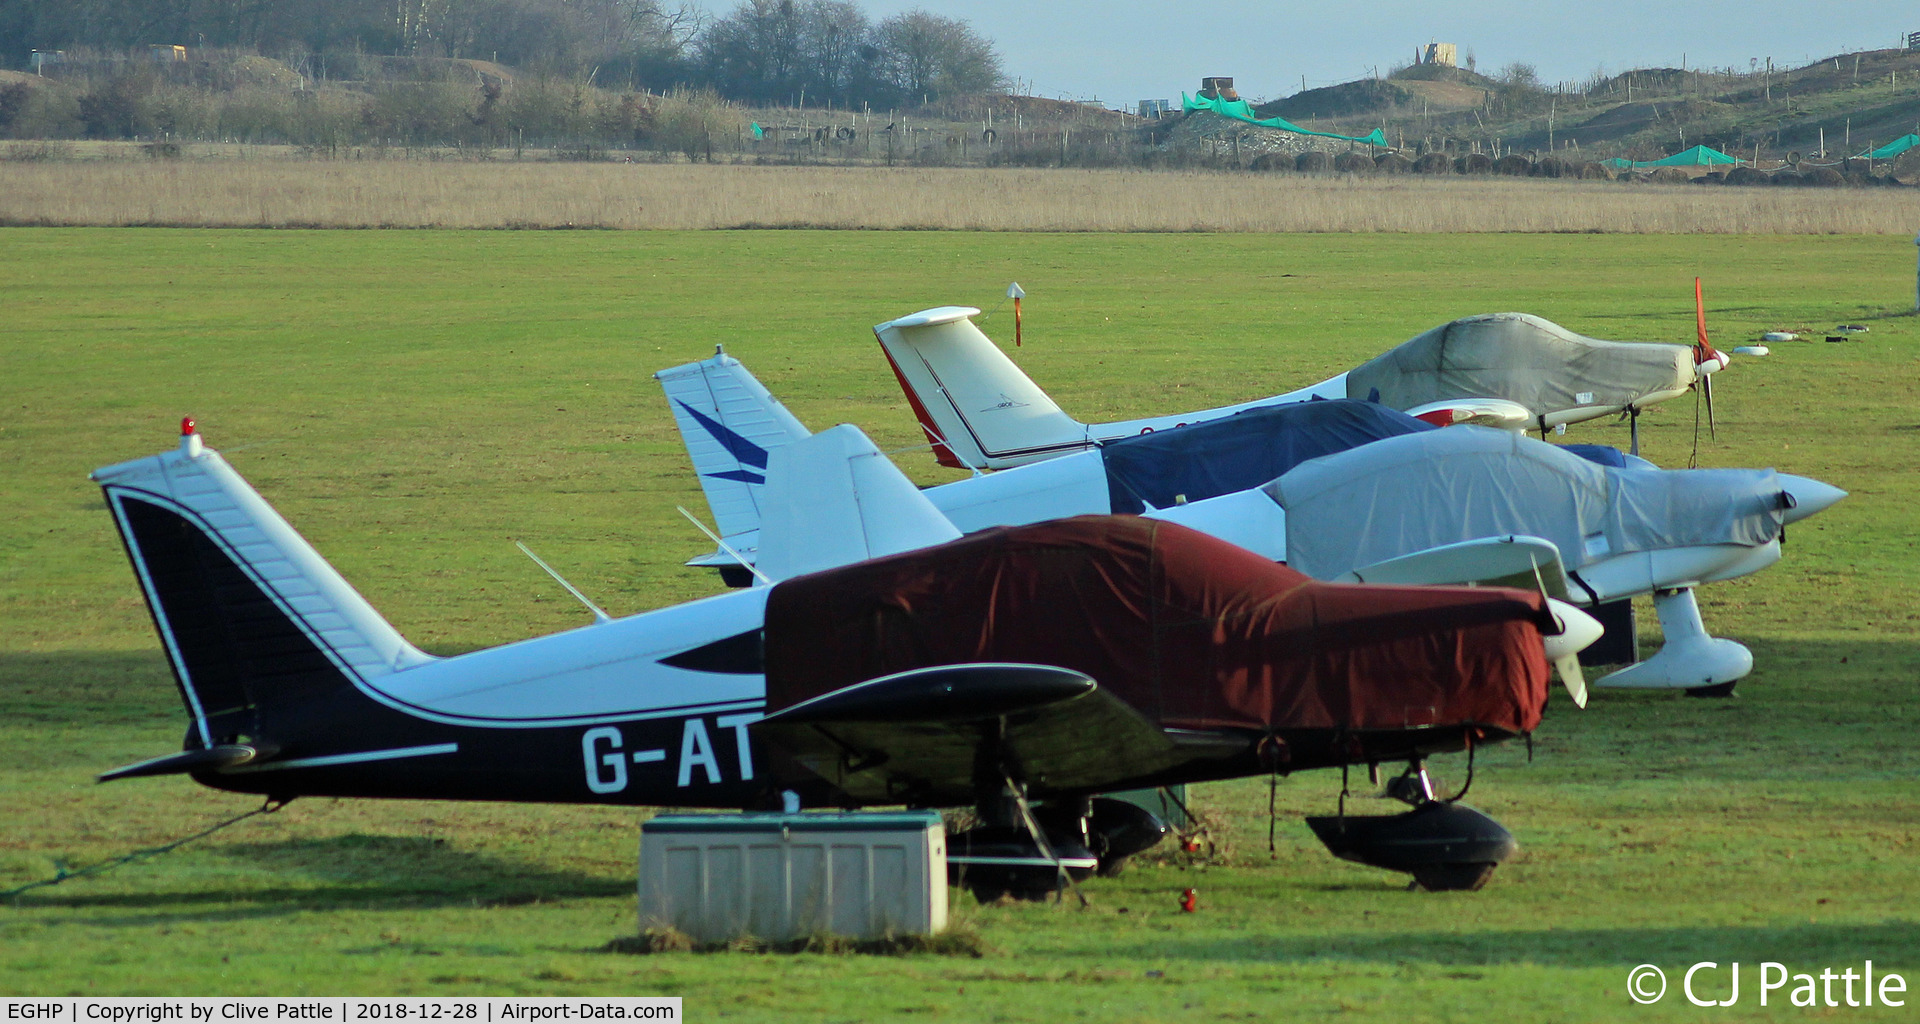 Popham Airfield Airport, Popham, England United Kingdom (EGHP) - Popham aircraft line-up